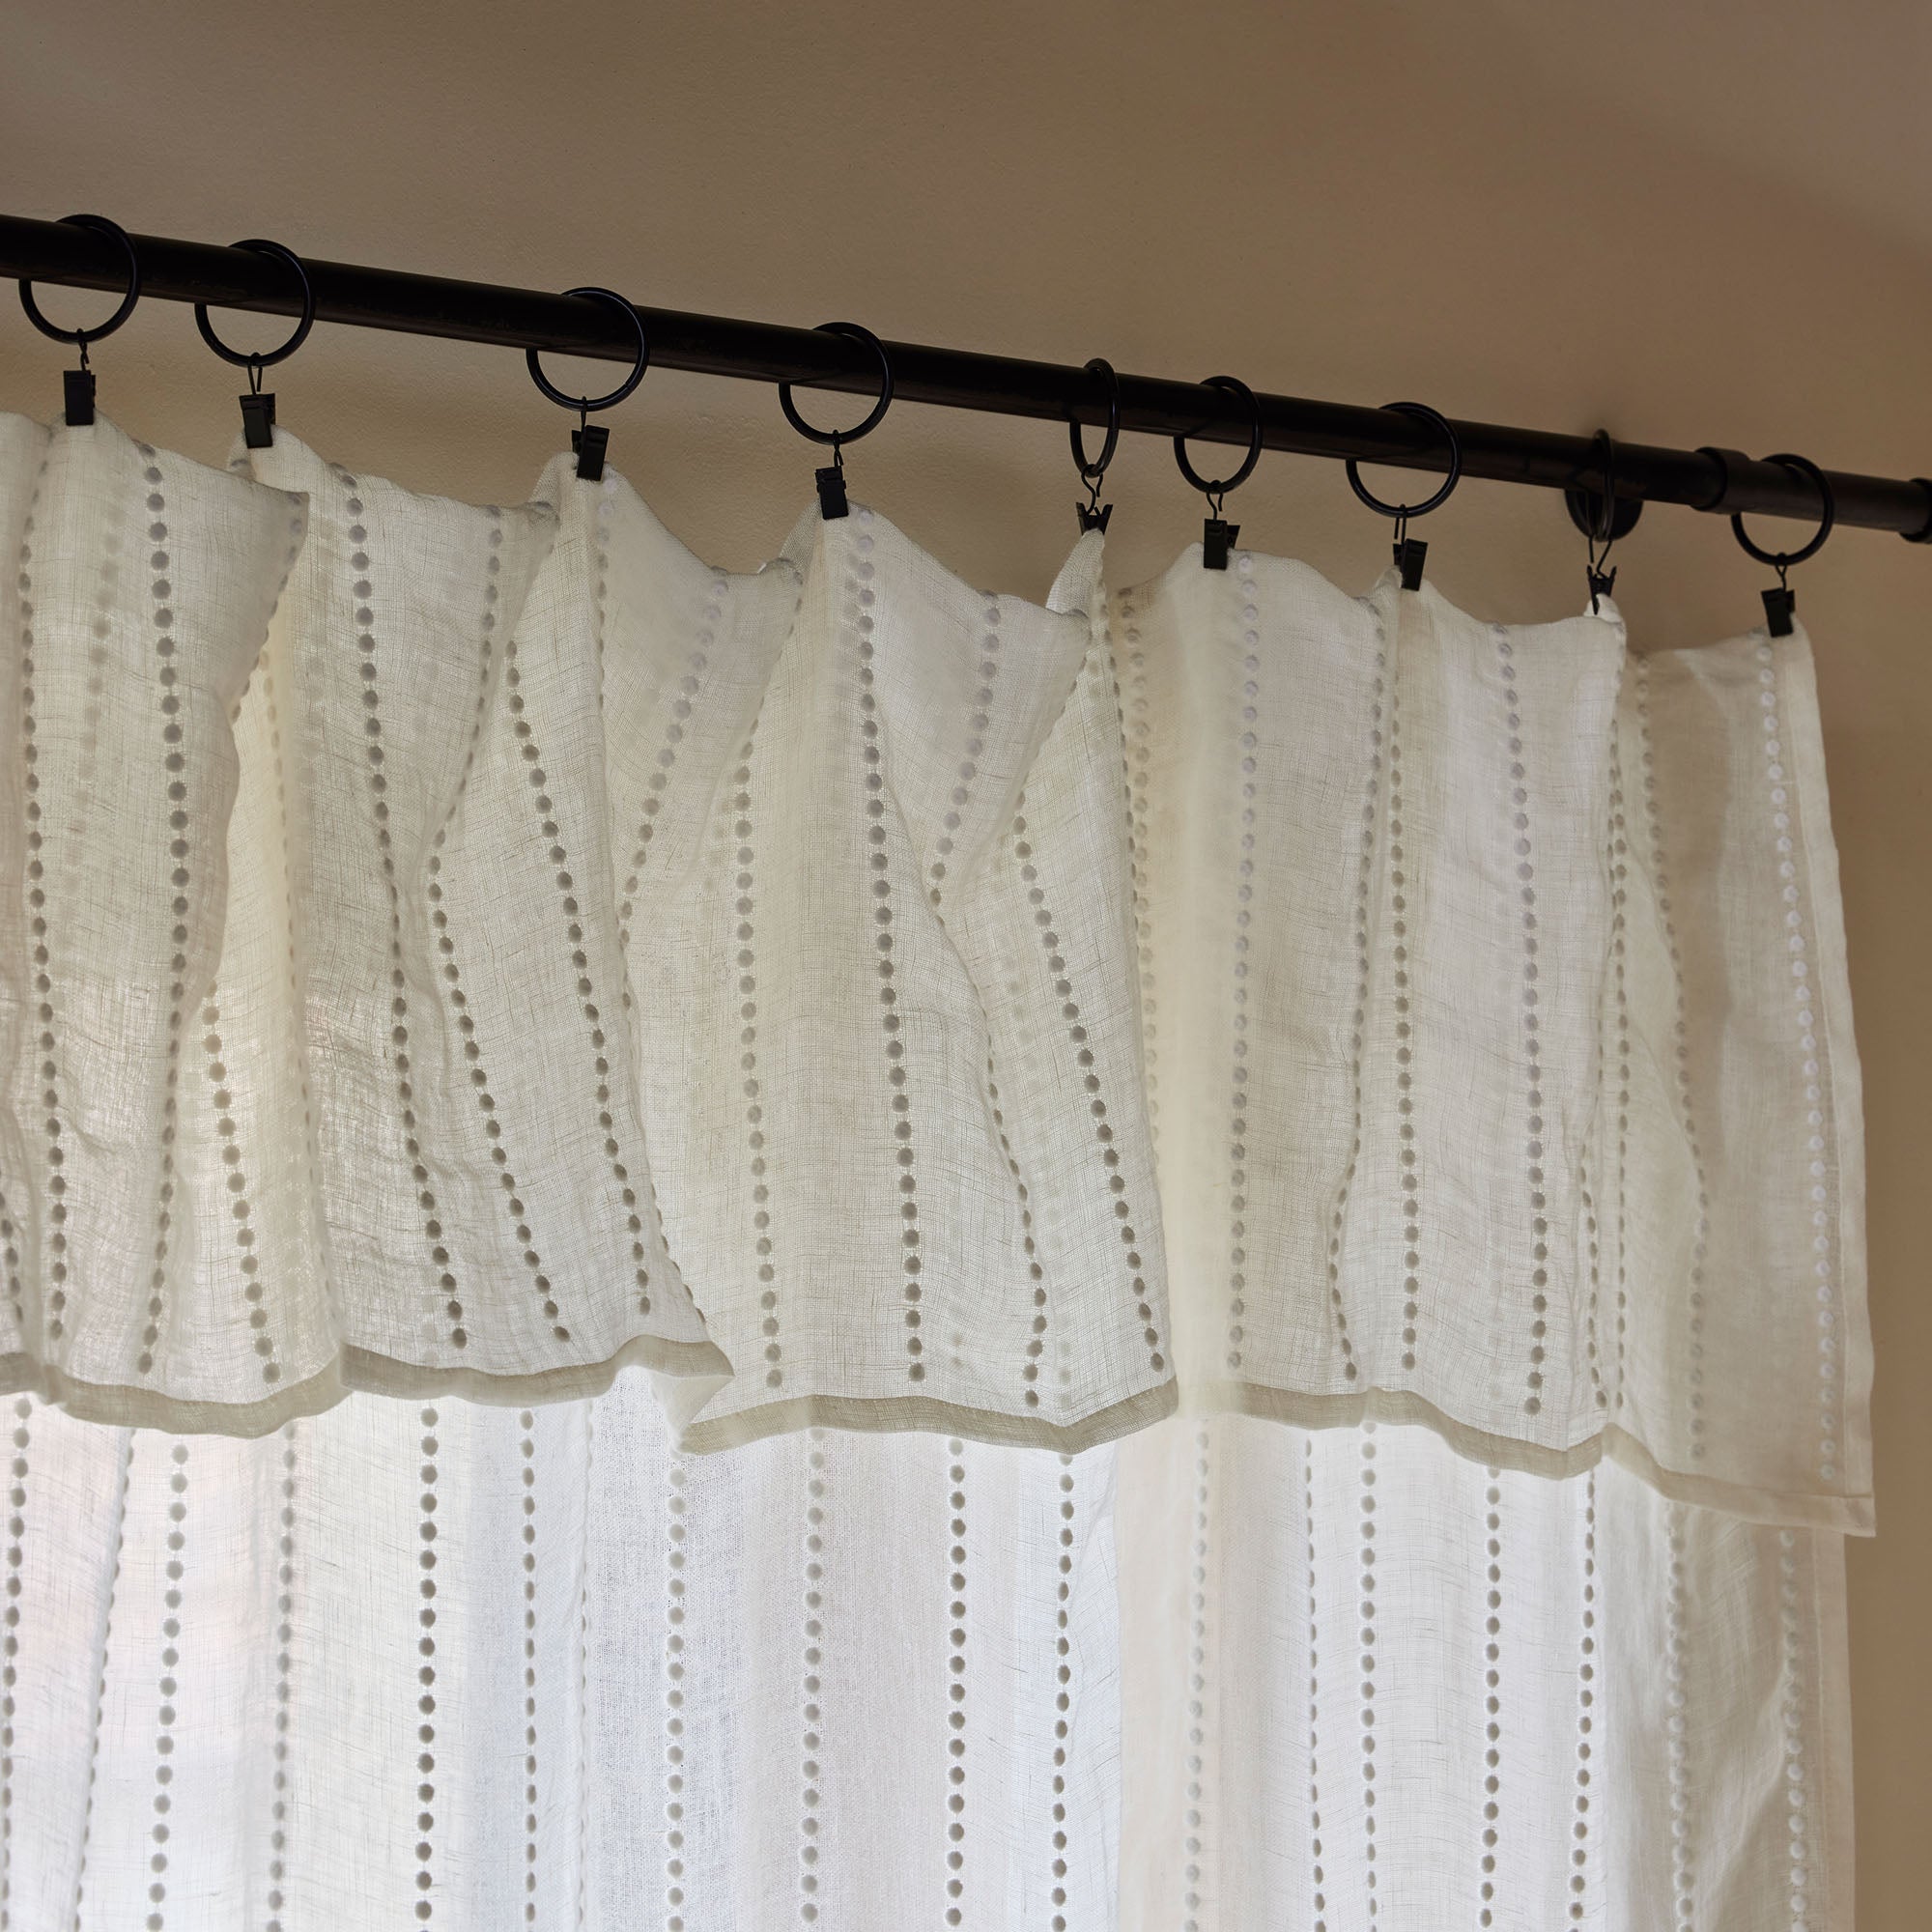 Symi white panel sheer curtain